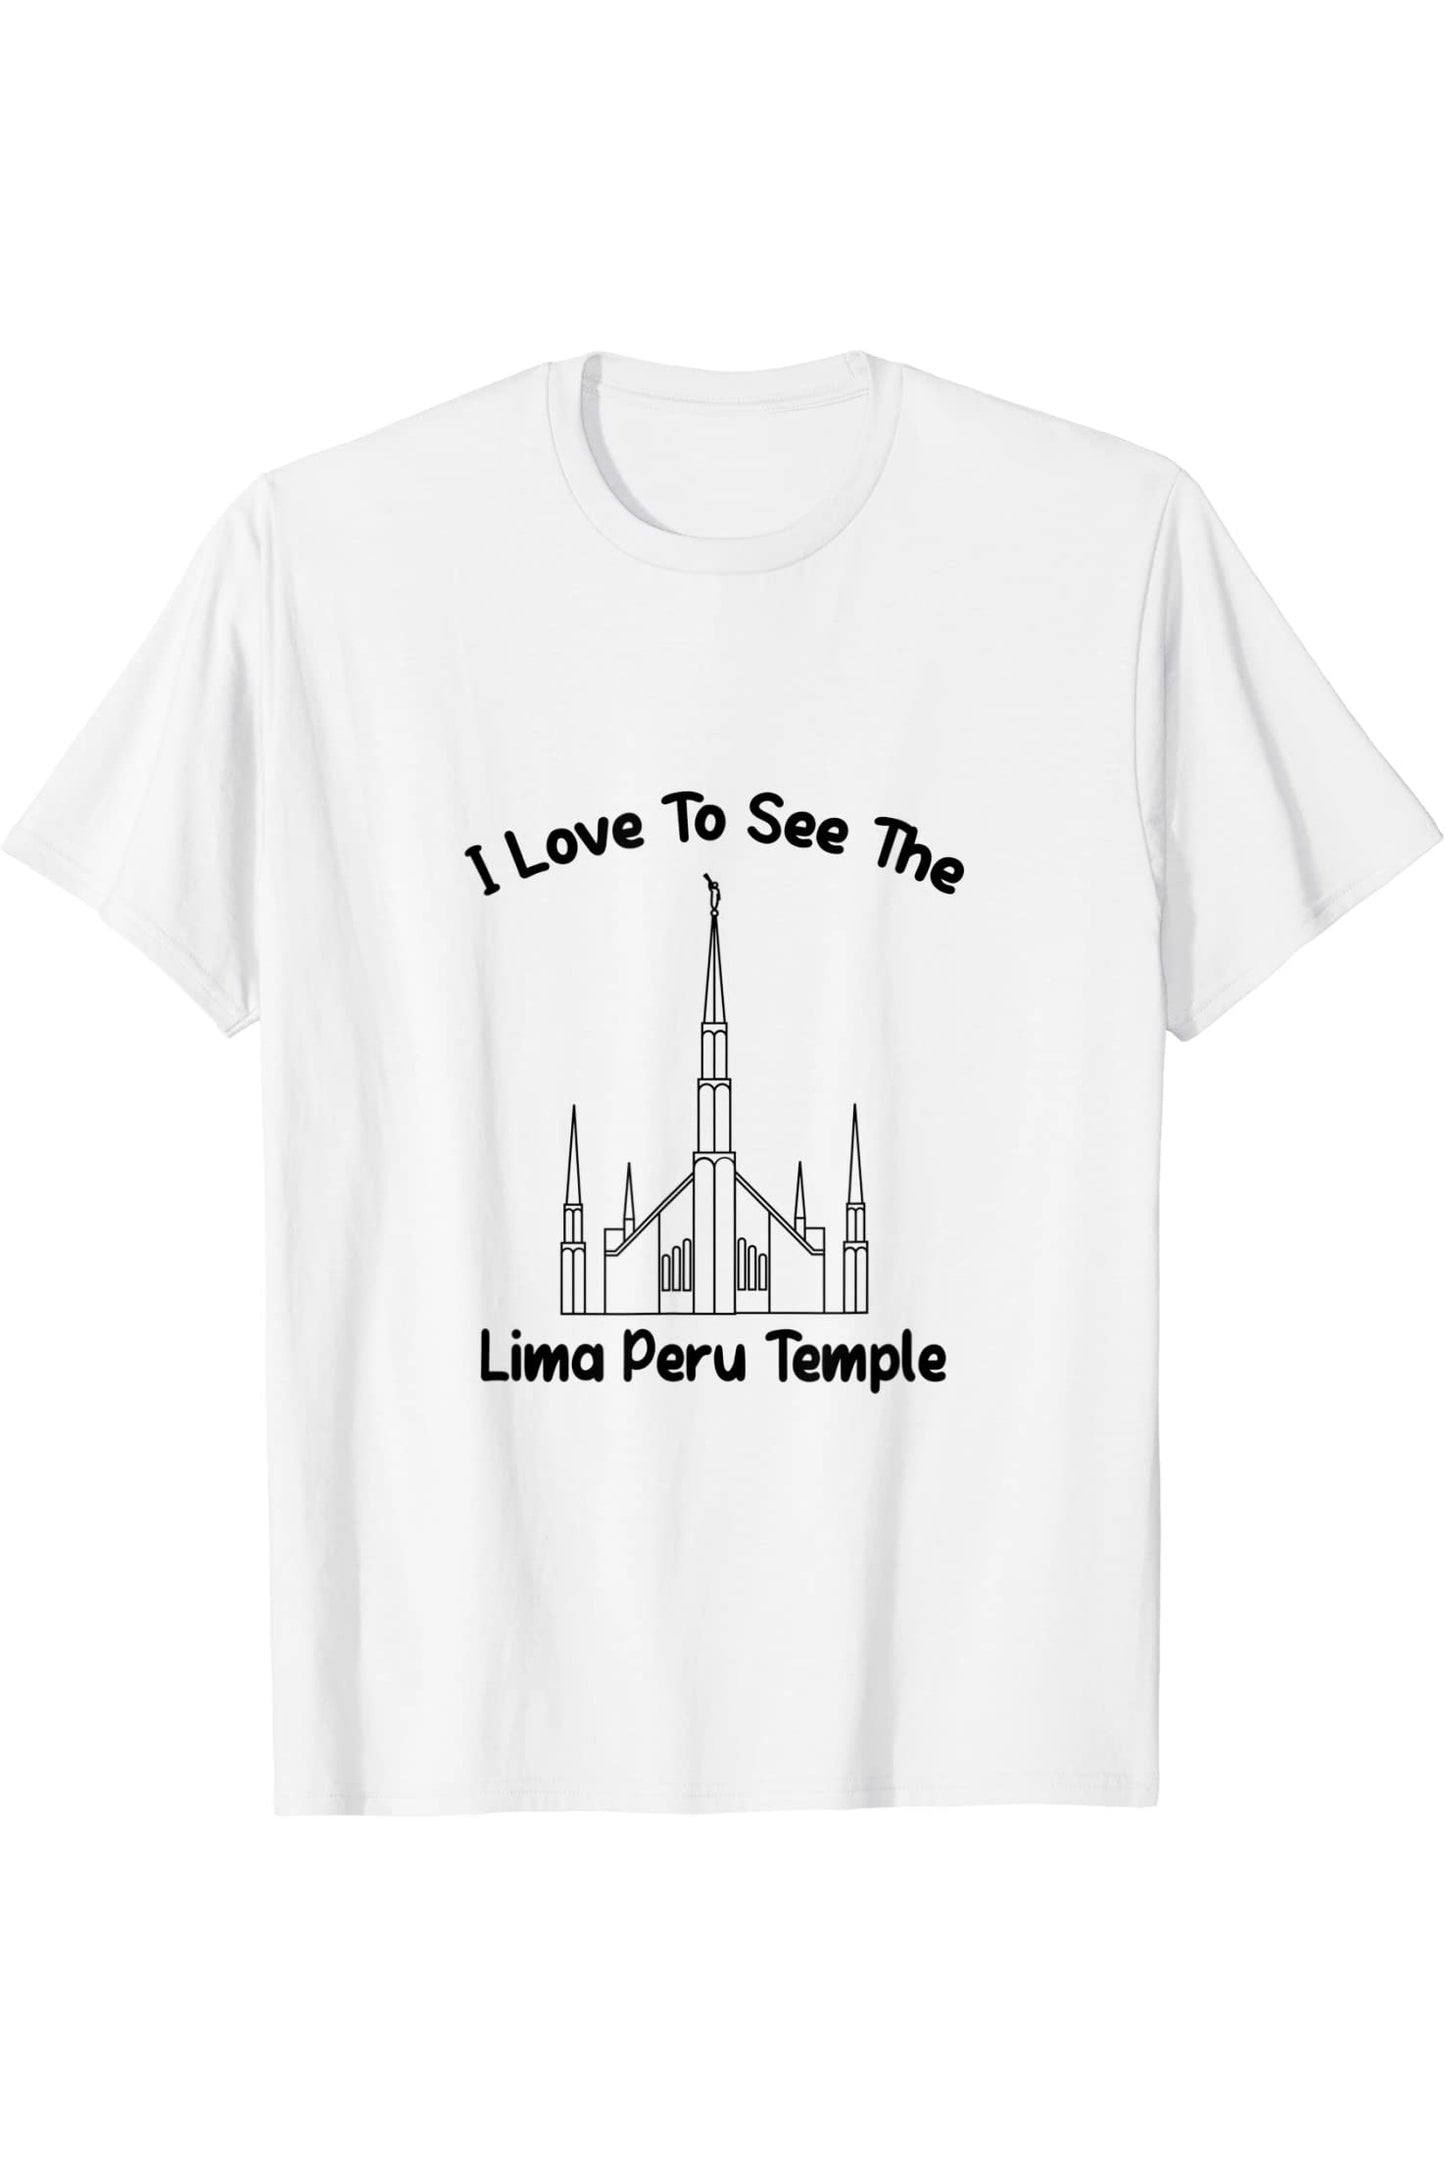 Lima Peru Temple T-Shirt - Primary Style (English) US